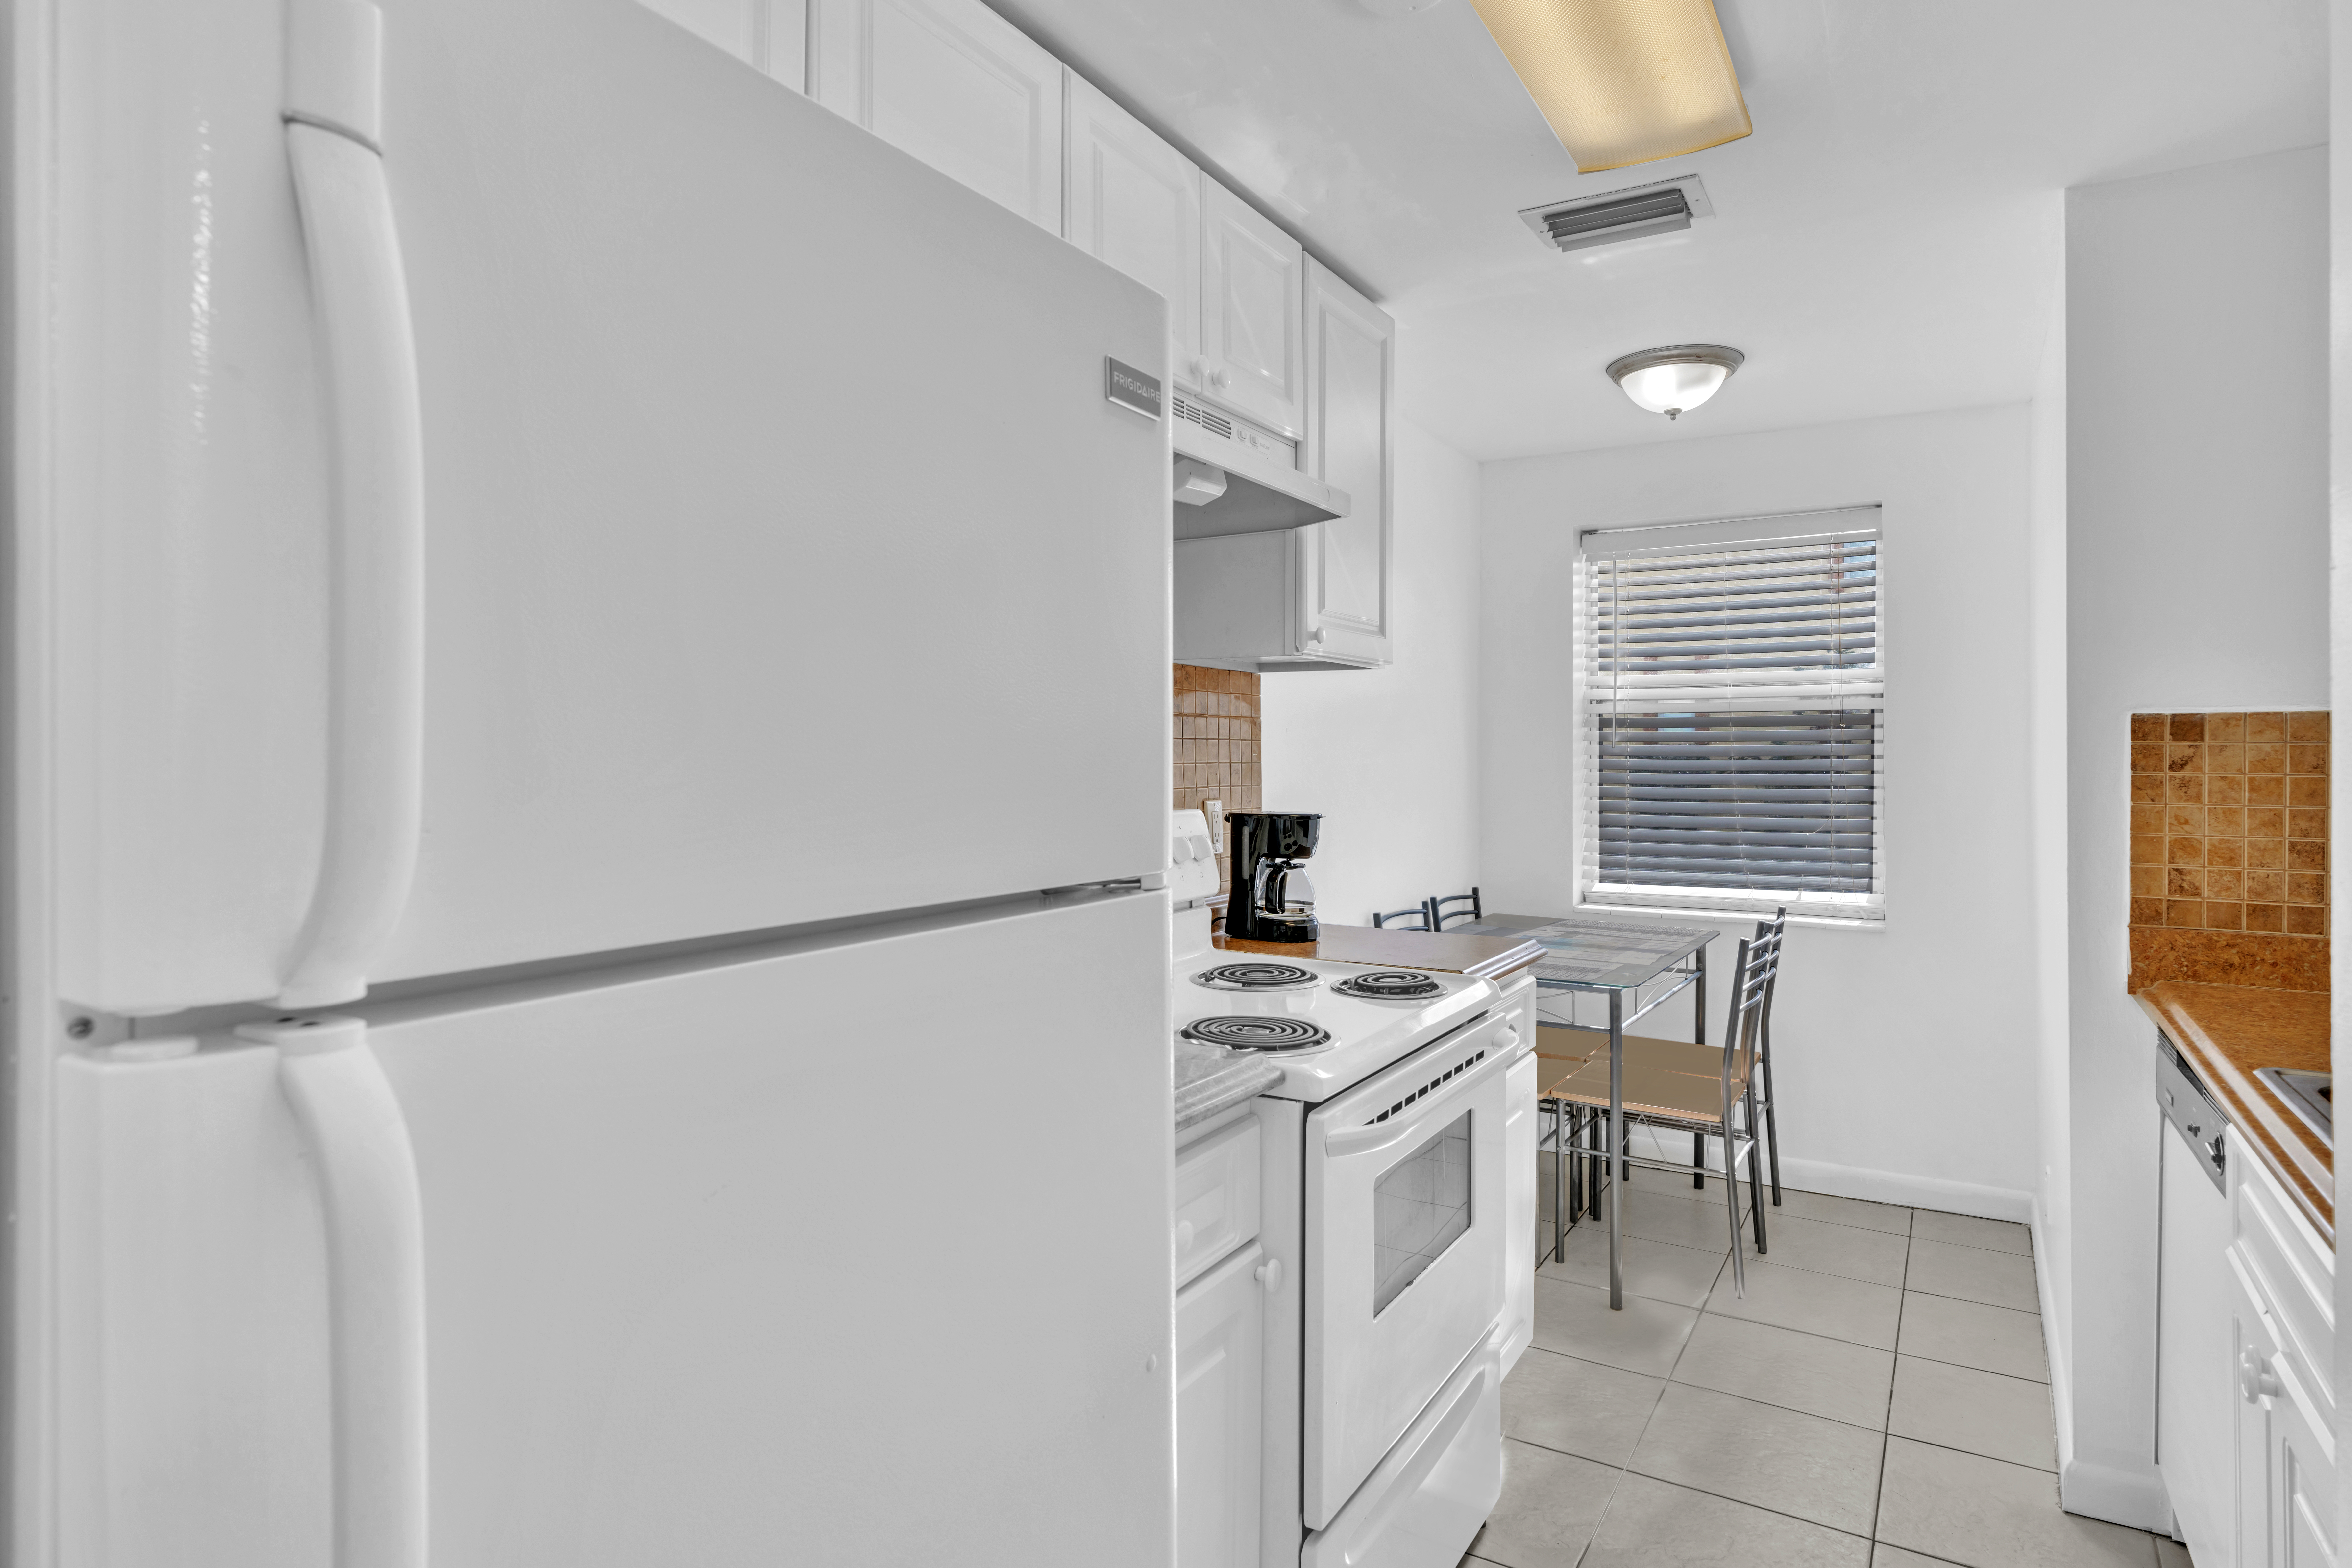 Florida 2023: New Hotel Opening - Full kitchen 